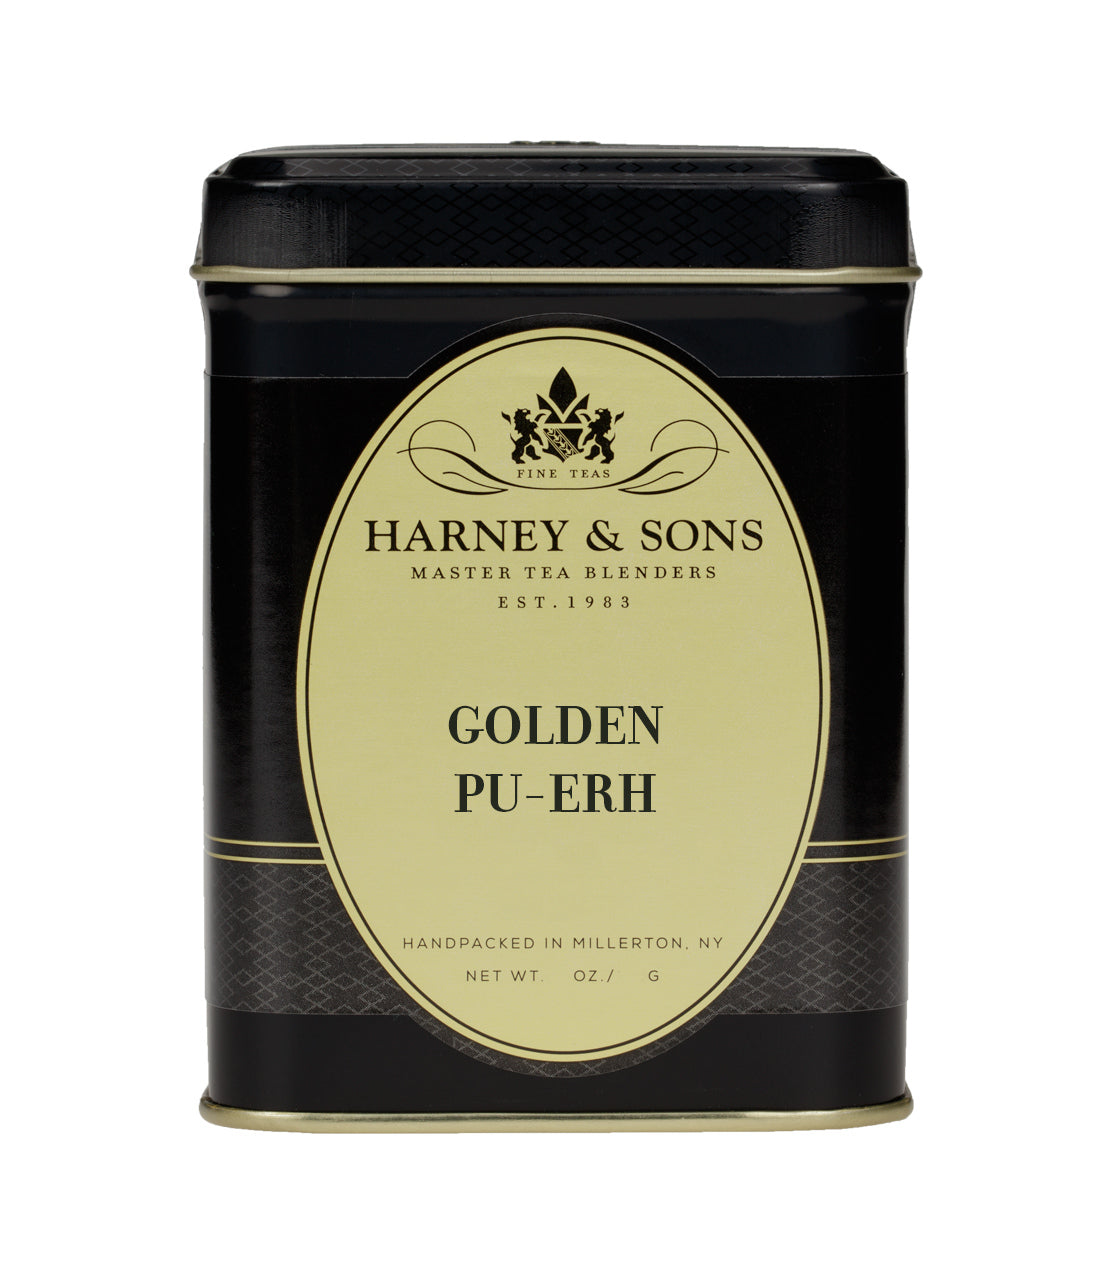 Golden Pu-Erh - Loose 2 oz. Tin - Harney & Sons Fine Teas